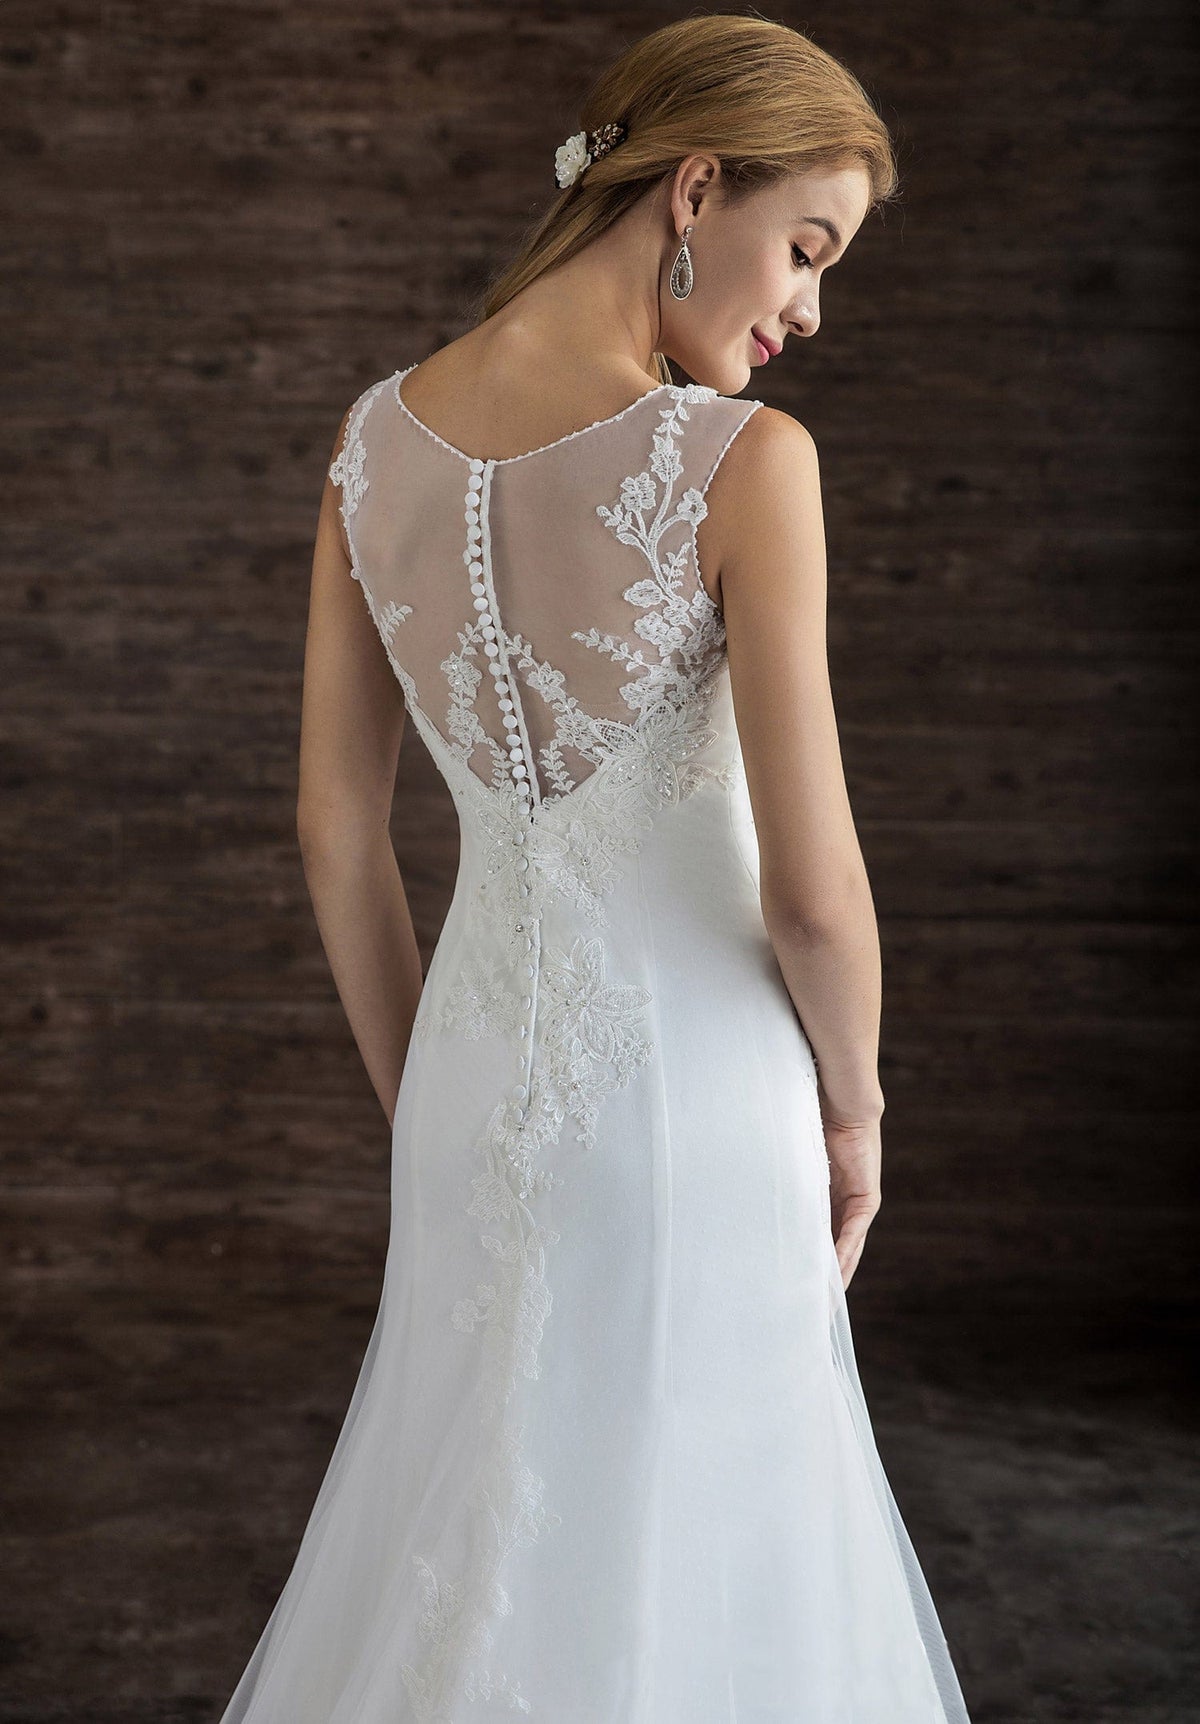 Elegant Illusion Neck With Floral Lace Mermaid Wedding Dress